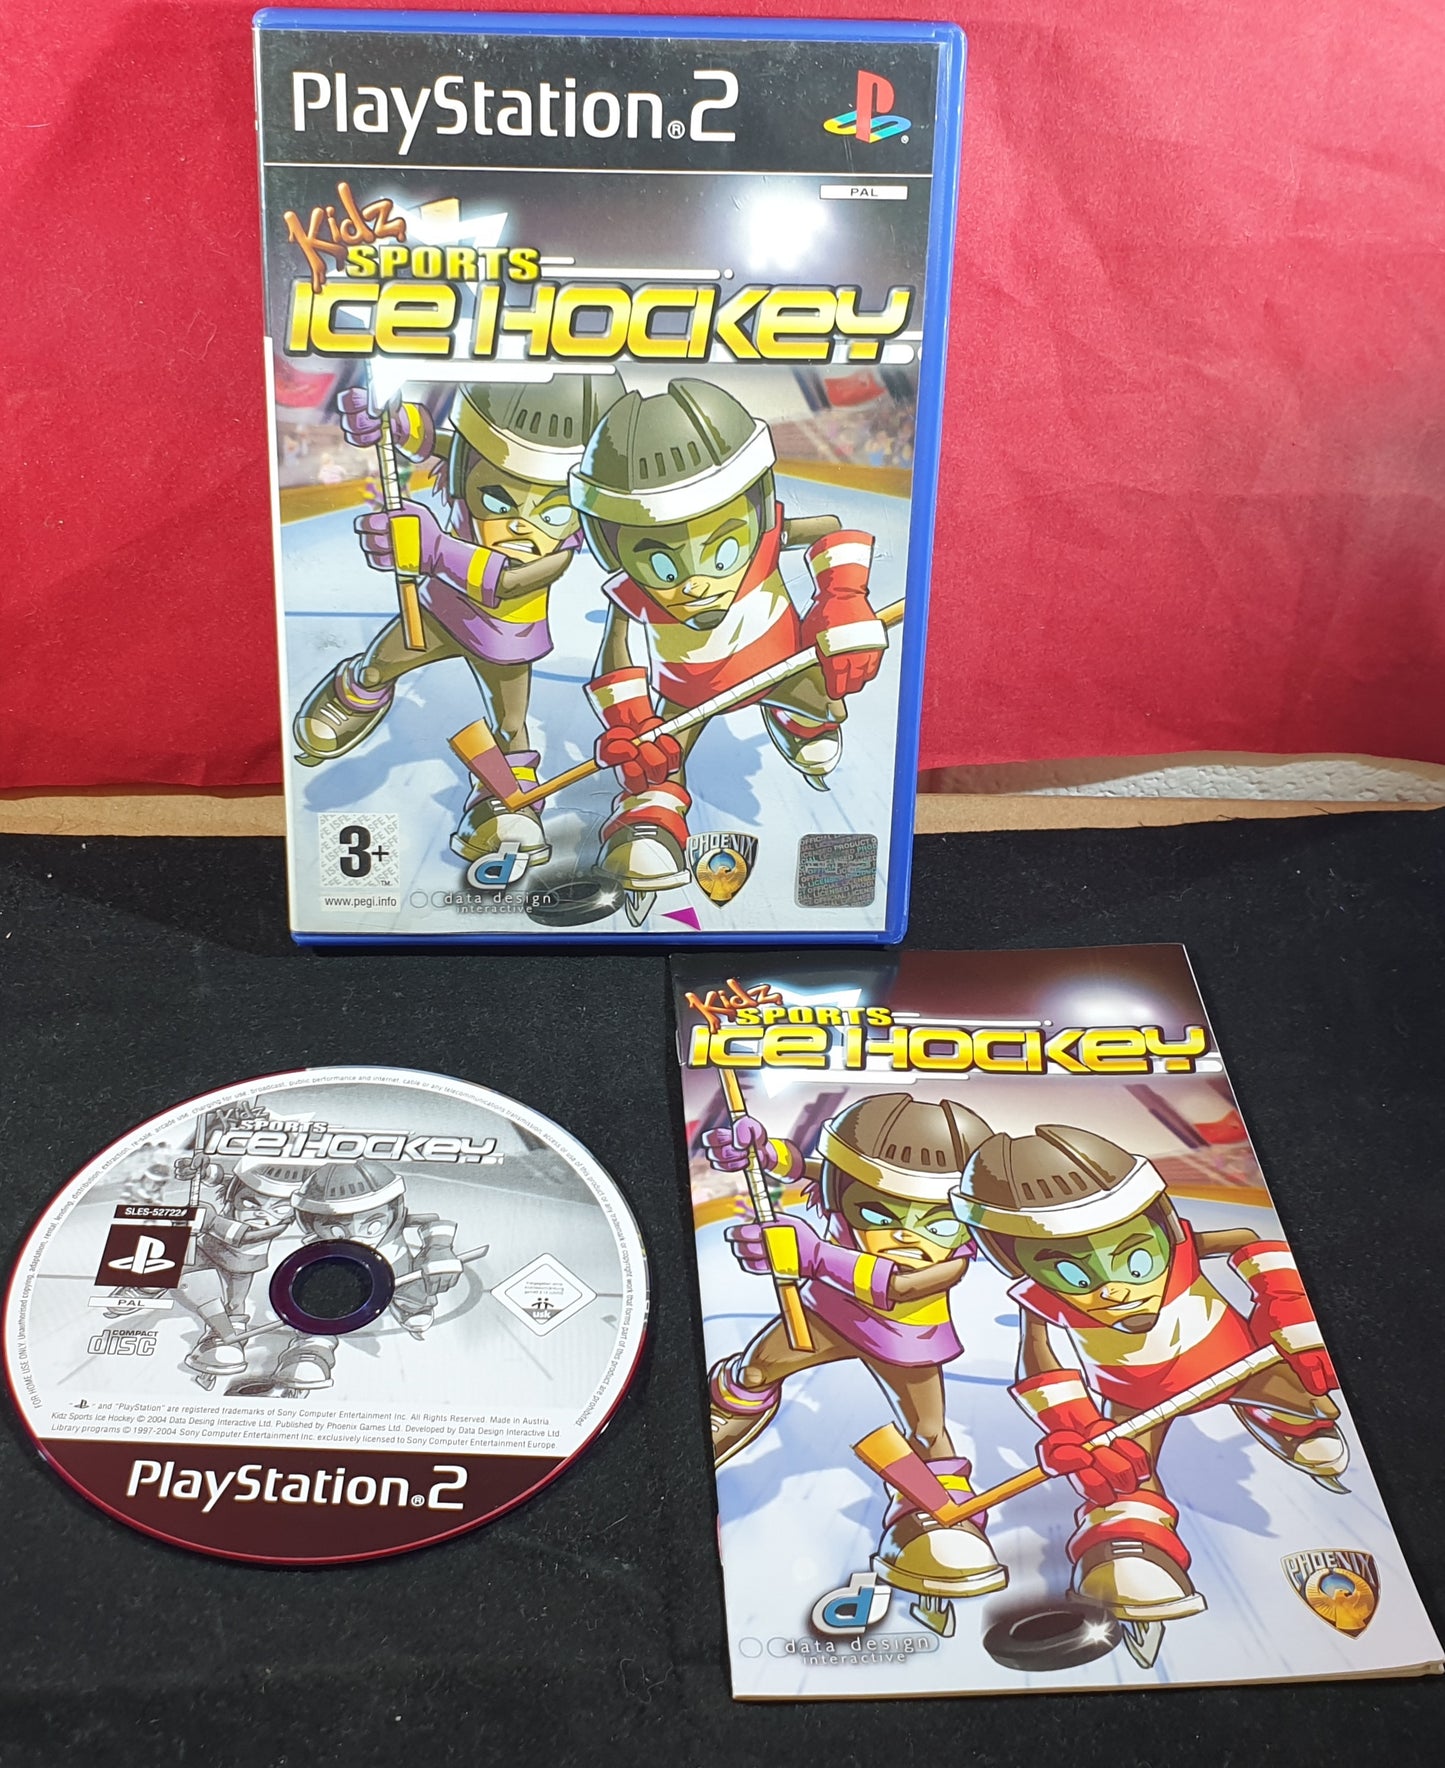 Kidz Sports Ice Hockey Sony Playstation 2 (PS2) Game